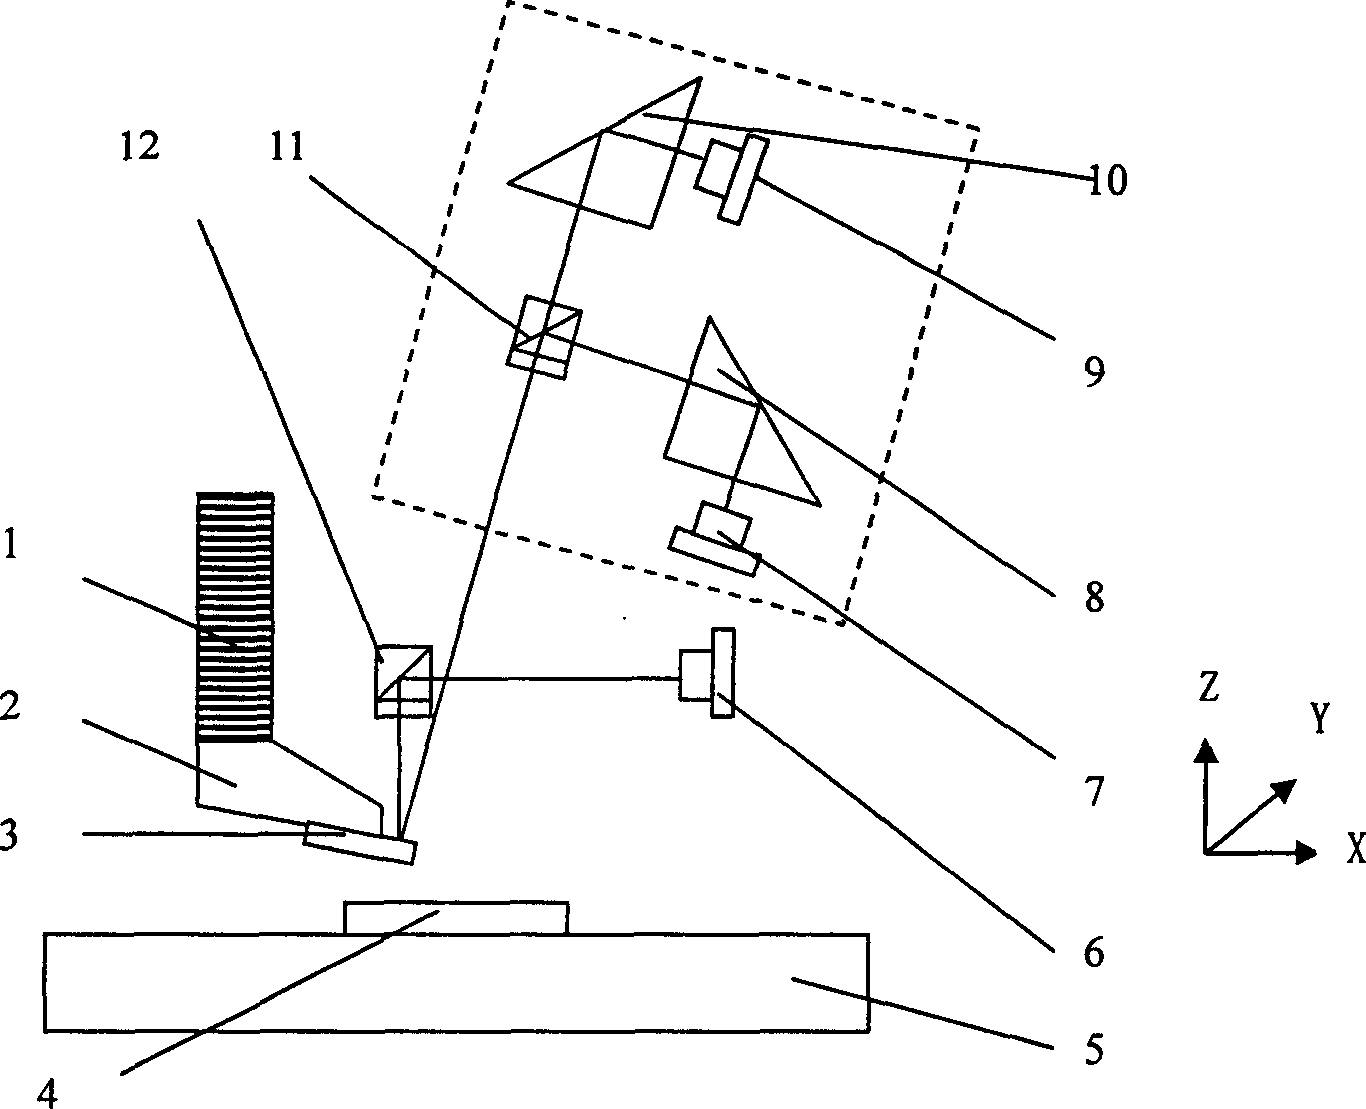 Atomic force microscope measuring method based on angular measurement